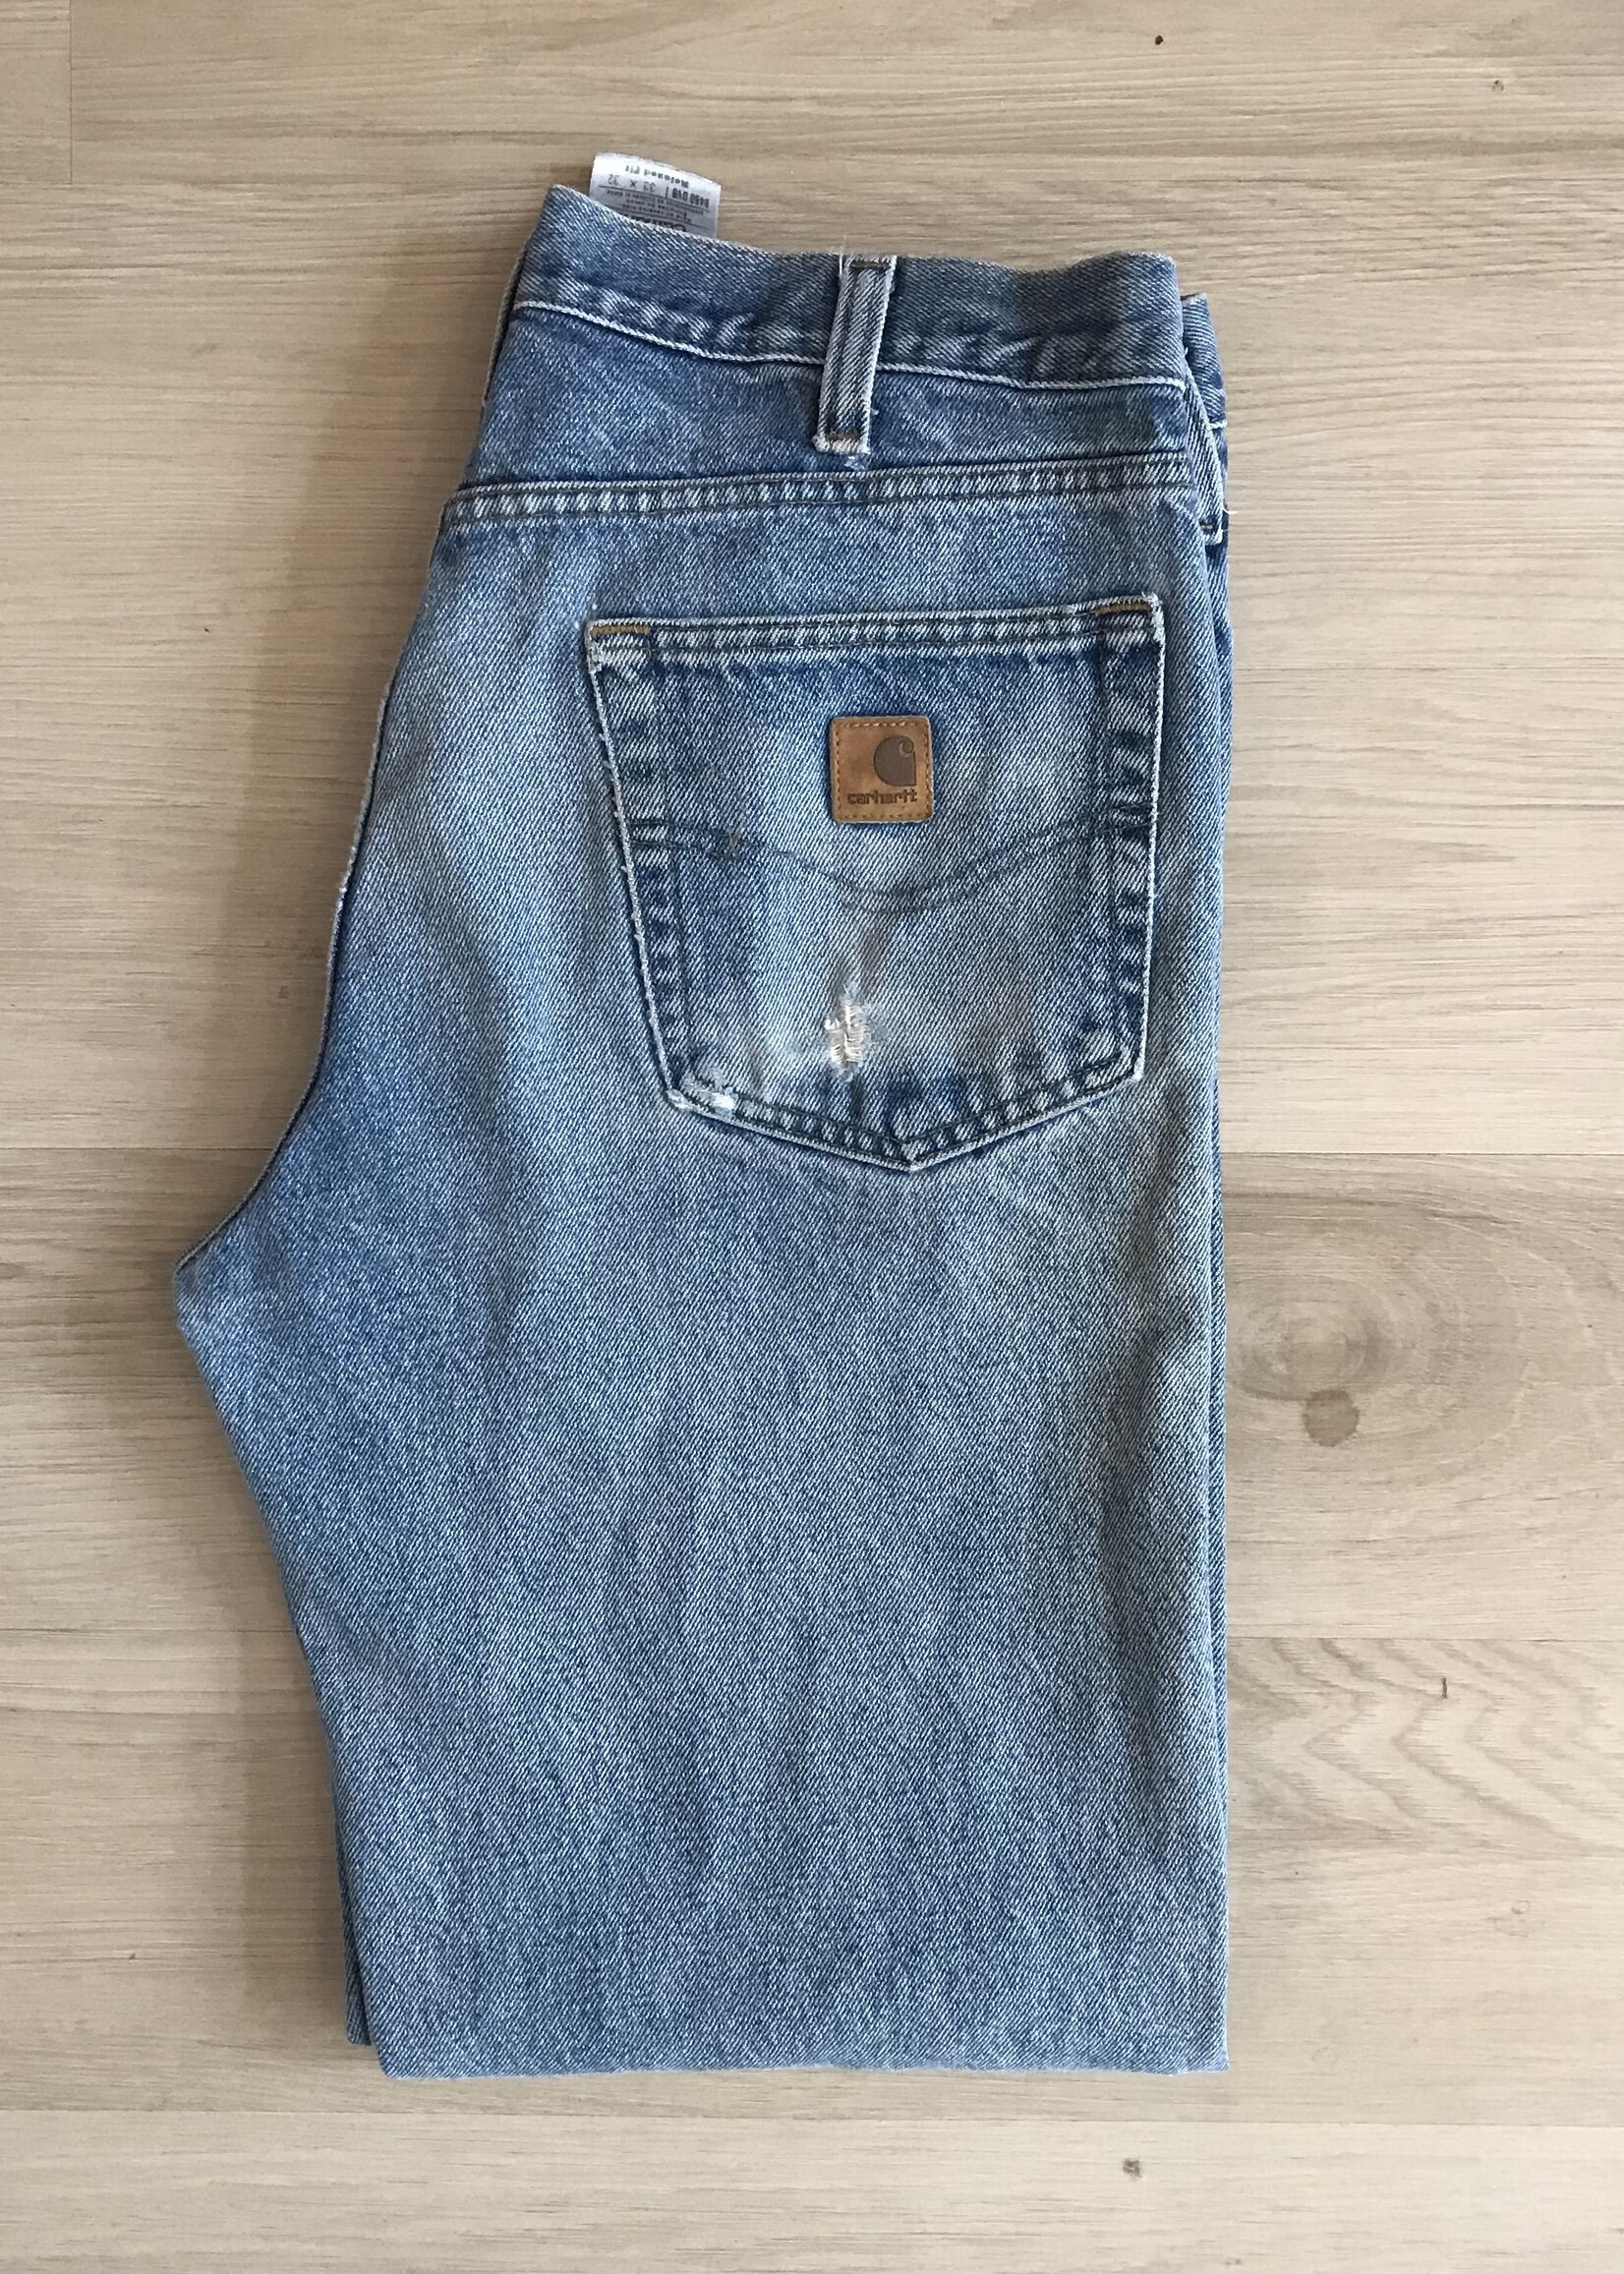 11744	carhartt jeans sz. 33 x 32